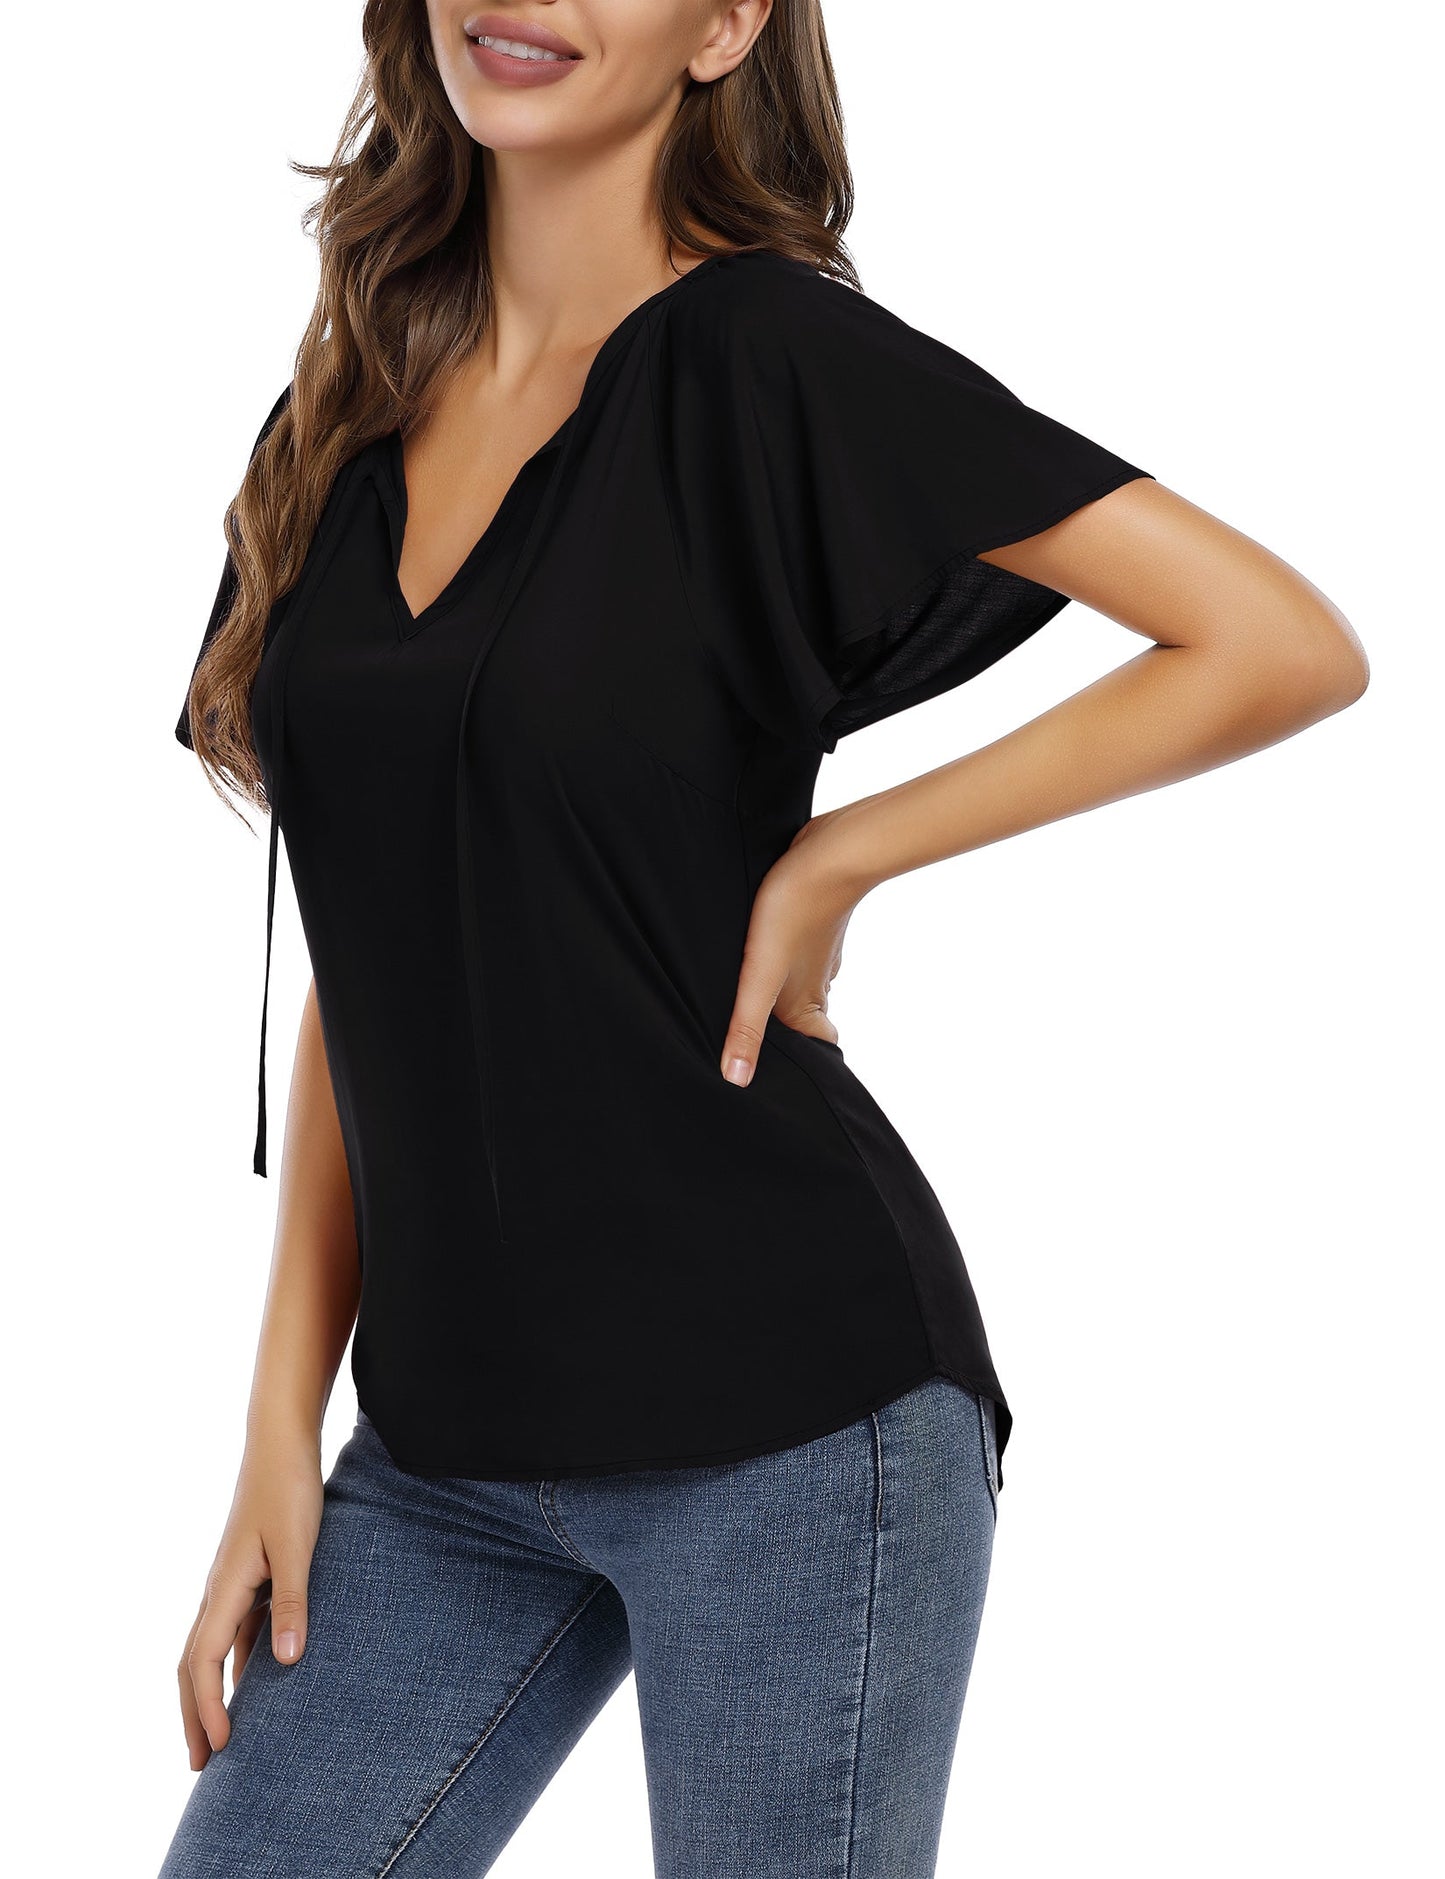 YESFASHION Women's V Neck Top Short Ruffle Drawstring Shirt Black